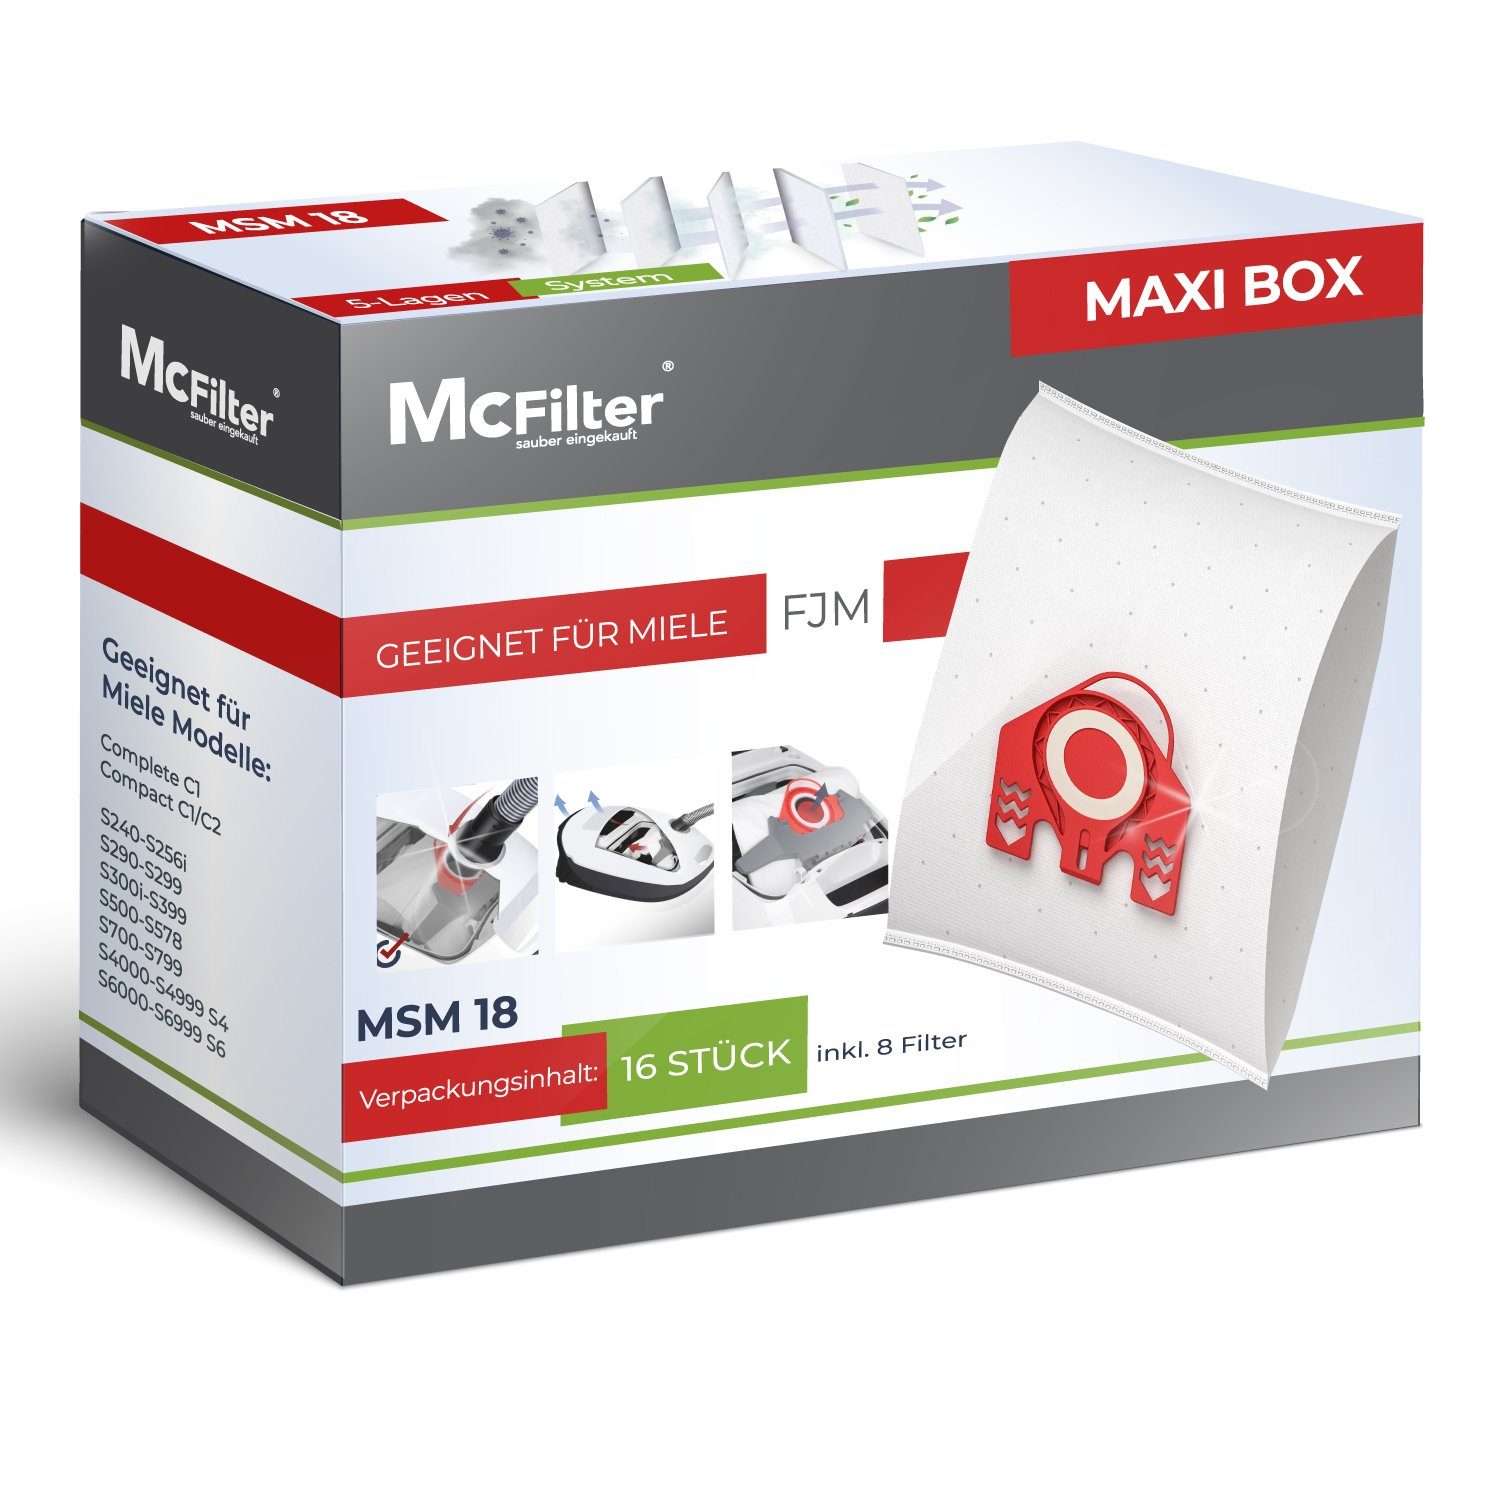 McFilter Staubsaugerbeutel MAXI BOX 16+8, passend für Miele FJM Serie, S2 S3 S4 S5 S6 S7, Complete C1, Compact C1/C2, inkl. 8 Filter, 16 St., Top Miele Alternative zu 9917710, wie 10408420